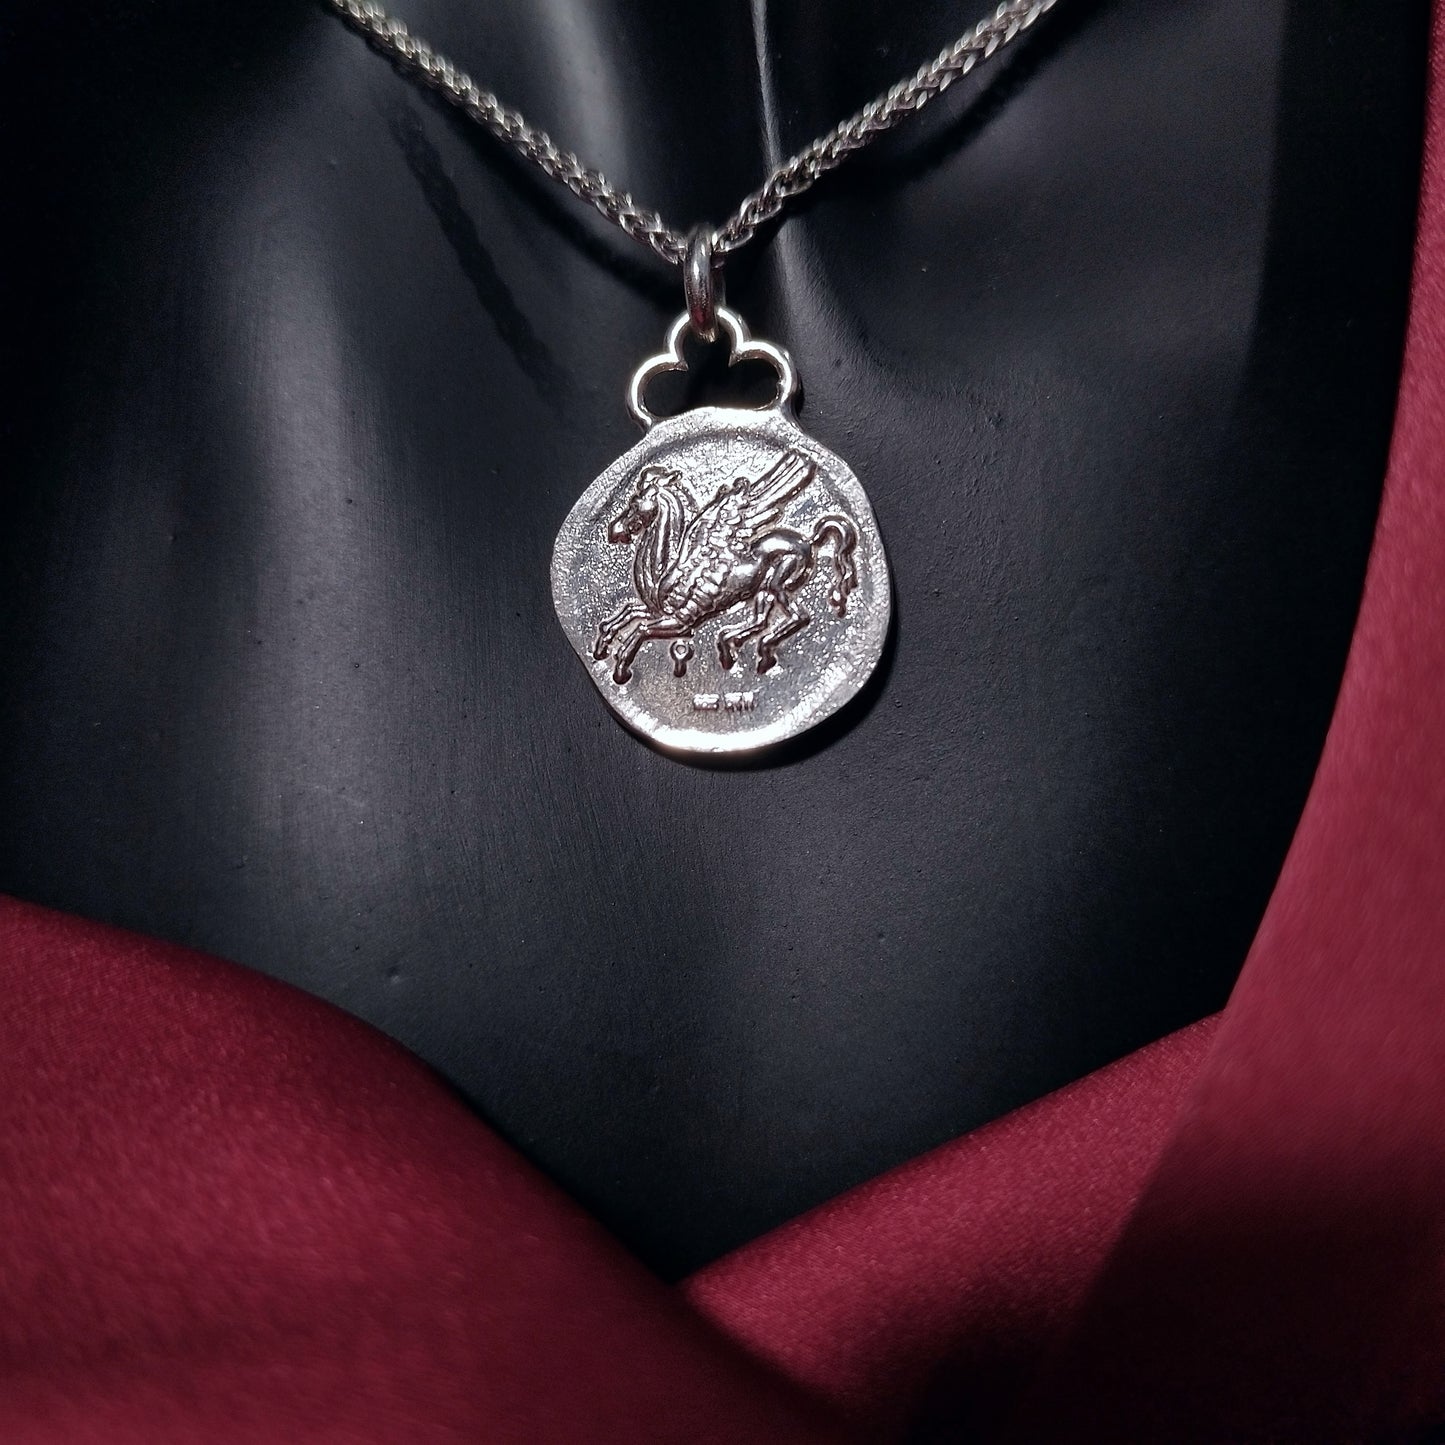 Pegasus Corinthian Stater, ancient Greek coin pendant Athena and Pegasus in sterling silver 925